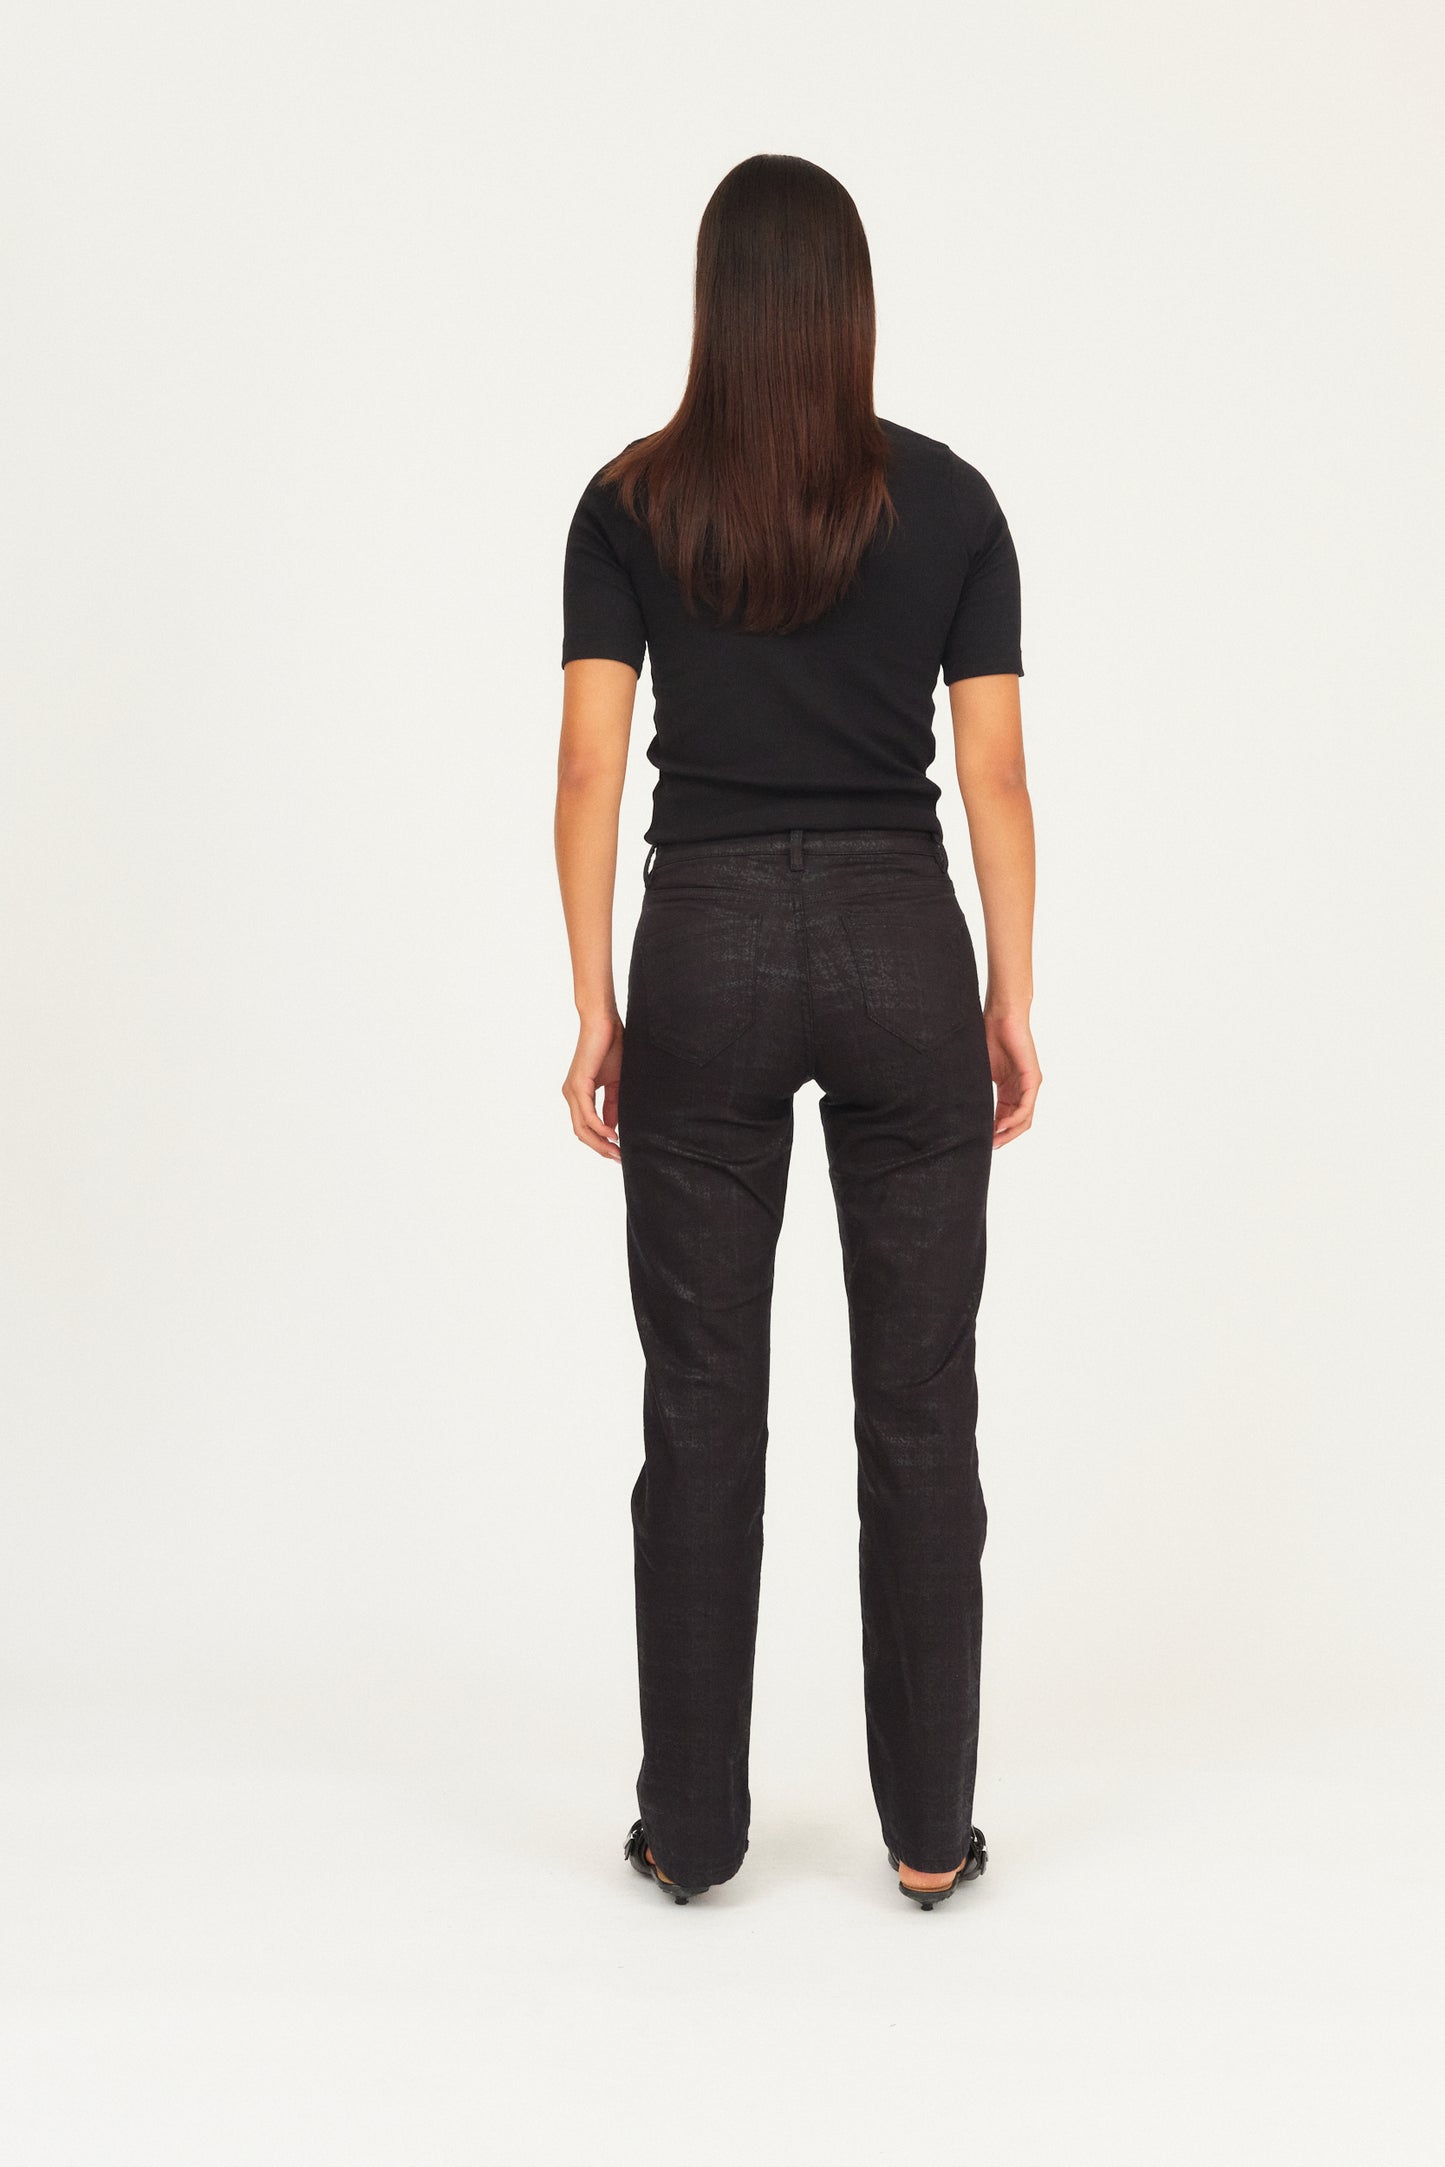 IVY Copenhagen IVY-Lulu Jeans Glam Black Jeans & Pants 9 Black